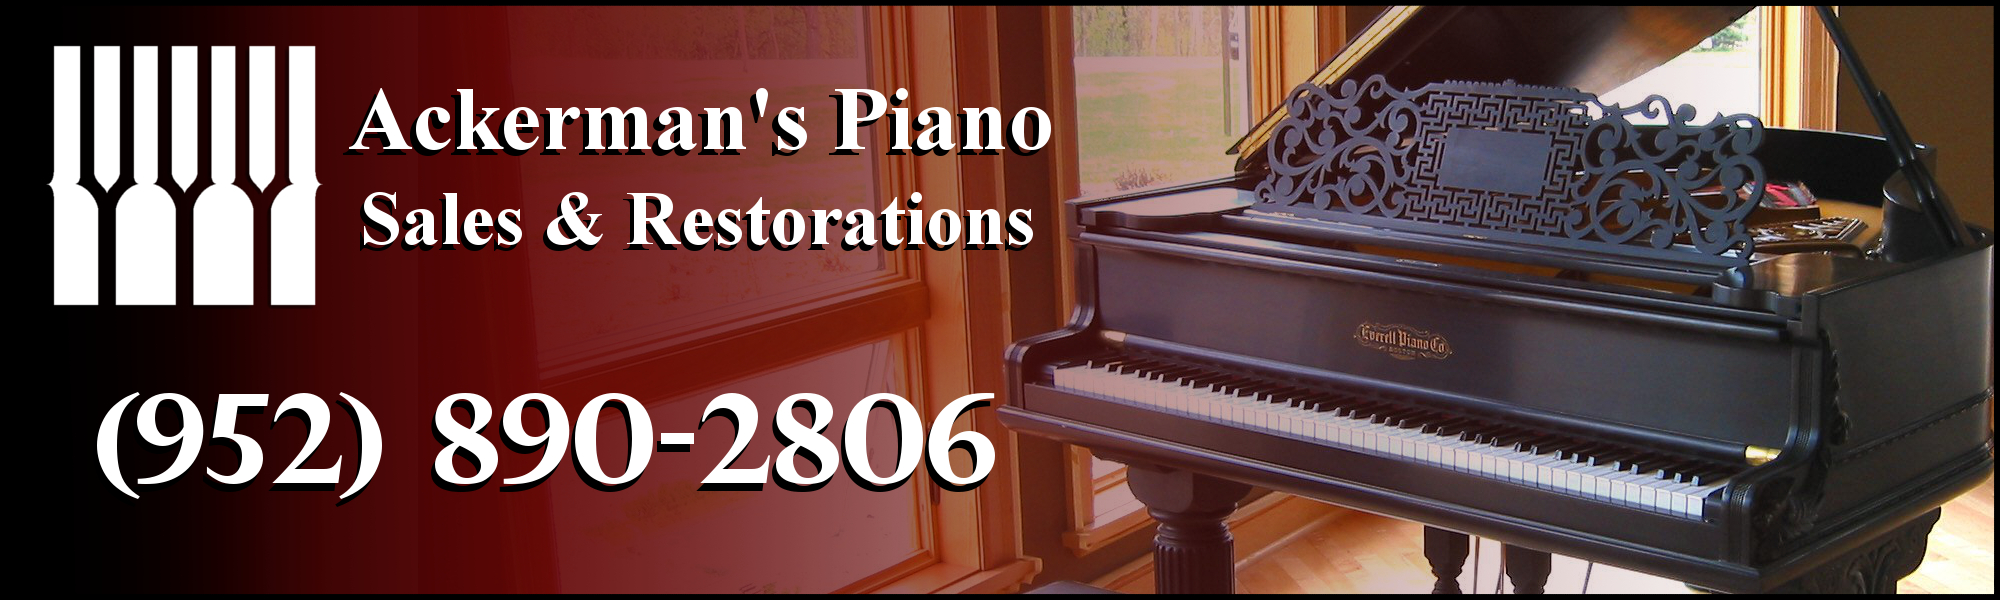 Ackerman's Piano Sales and Rsetorations Shop Page  952-890-2806